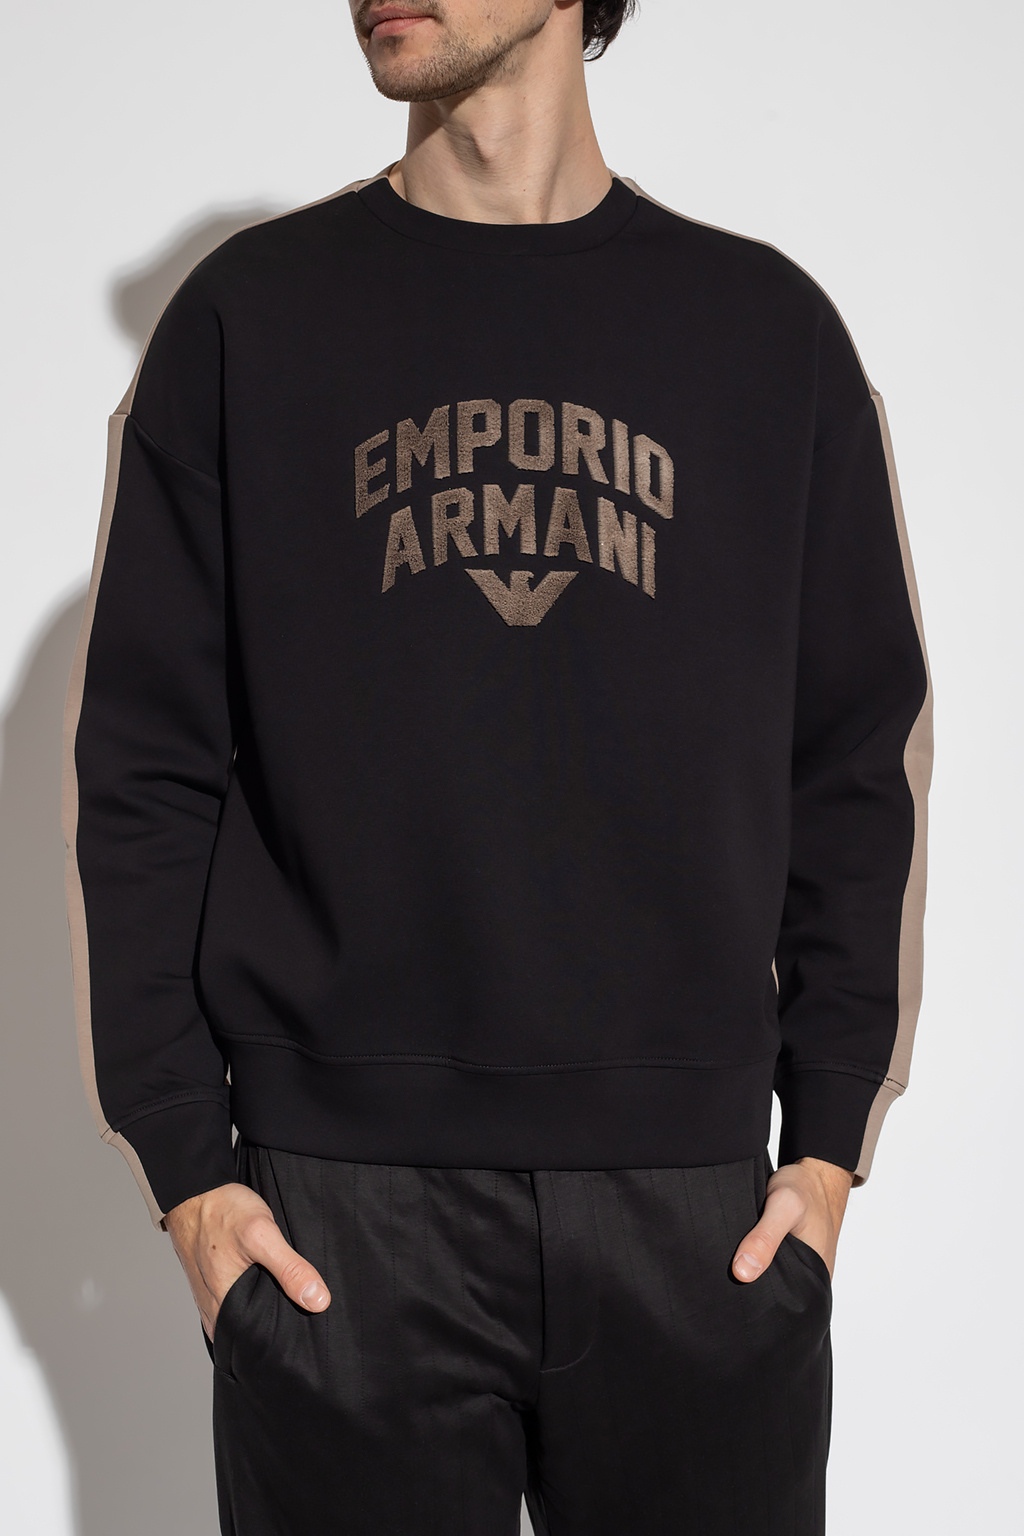 Emporio Gurung armani Sweatshirt with logo